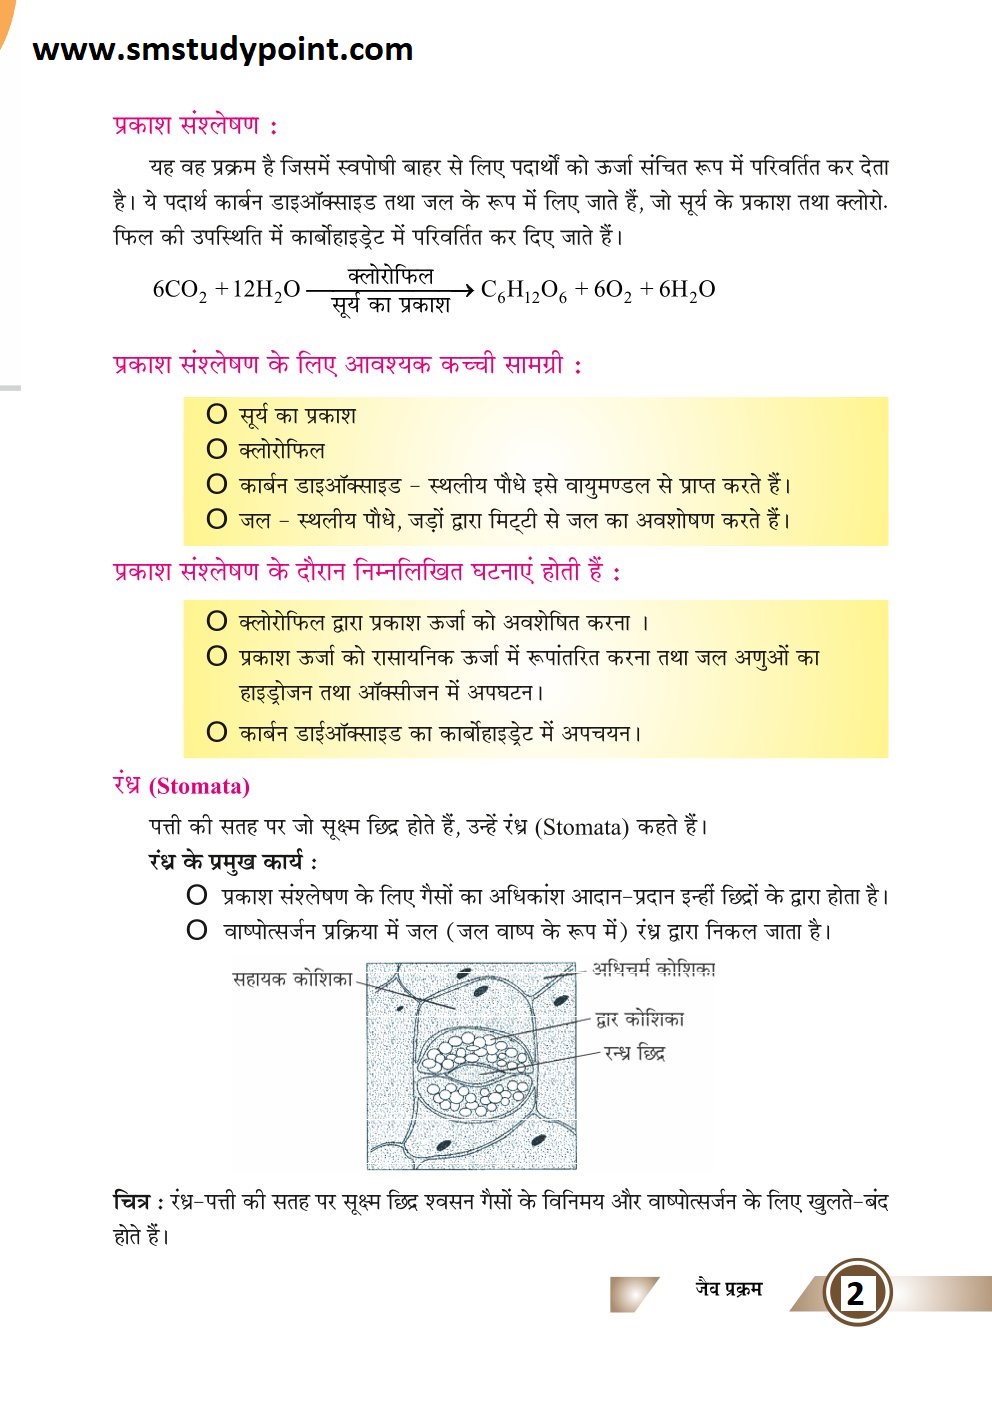 Bihar Board Class 10th Biology | Biological Process | Class 10 Biology Chapter 1 Rivision Notes PDF | जैव प्रक्रम | बिहार बोर्ड क्लास 10वीं जीवविज्ञान नोट्स | कक्षा 10 जीवविज्ञान हिंदी में नोट्स